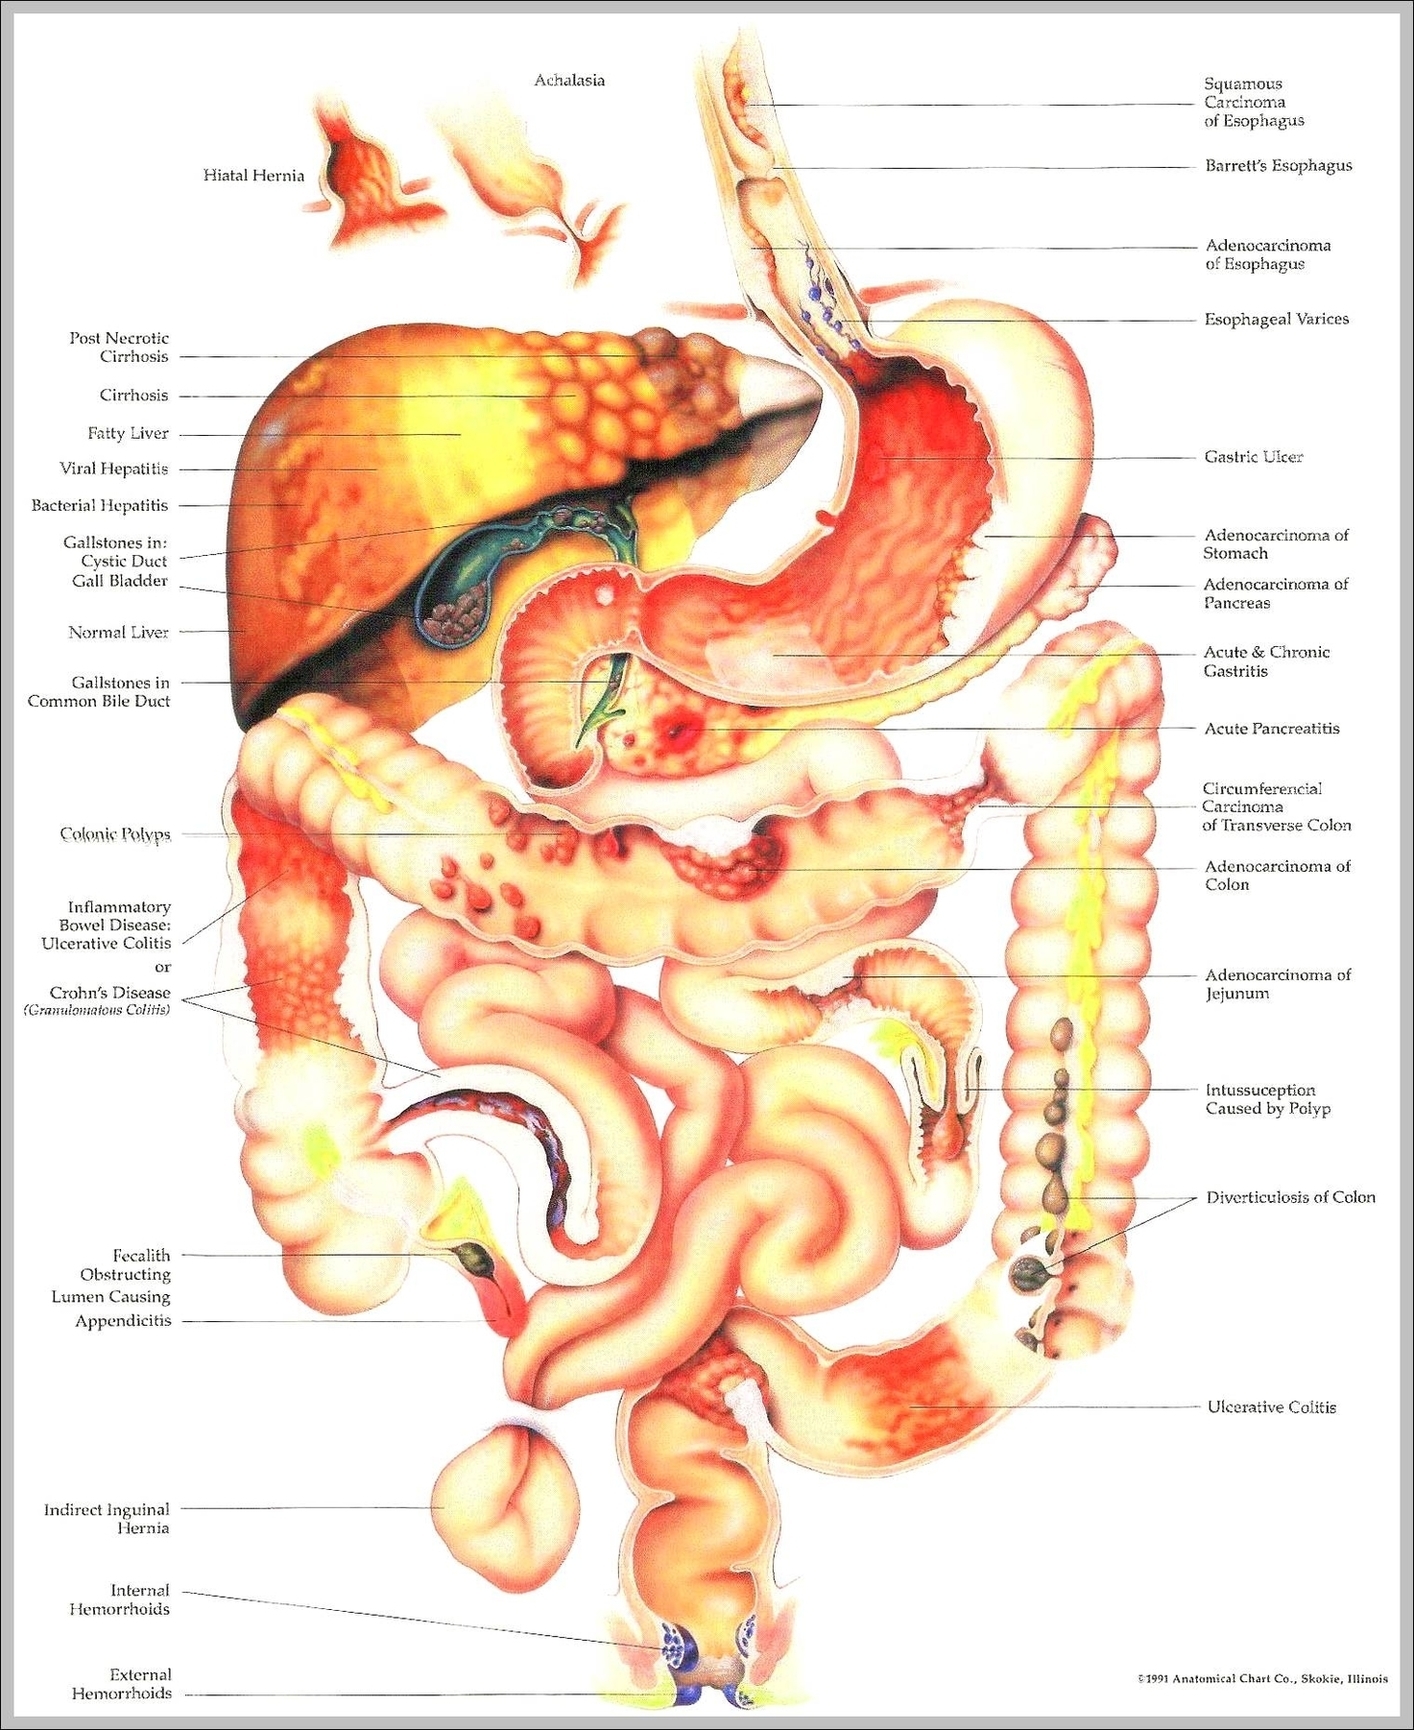 Anatomy Of Abdomen1 Image